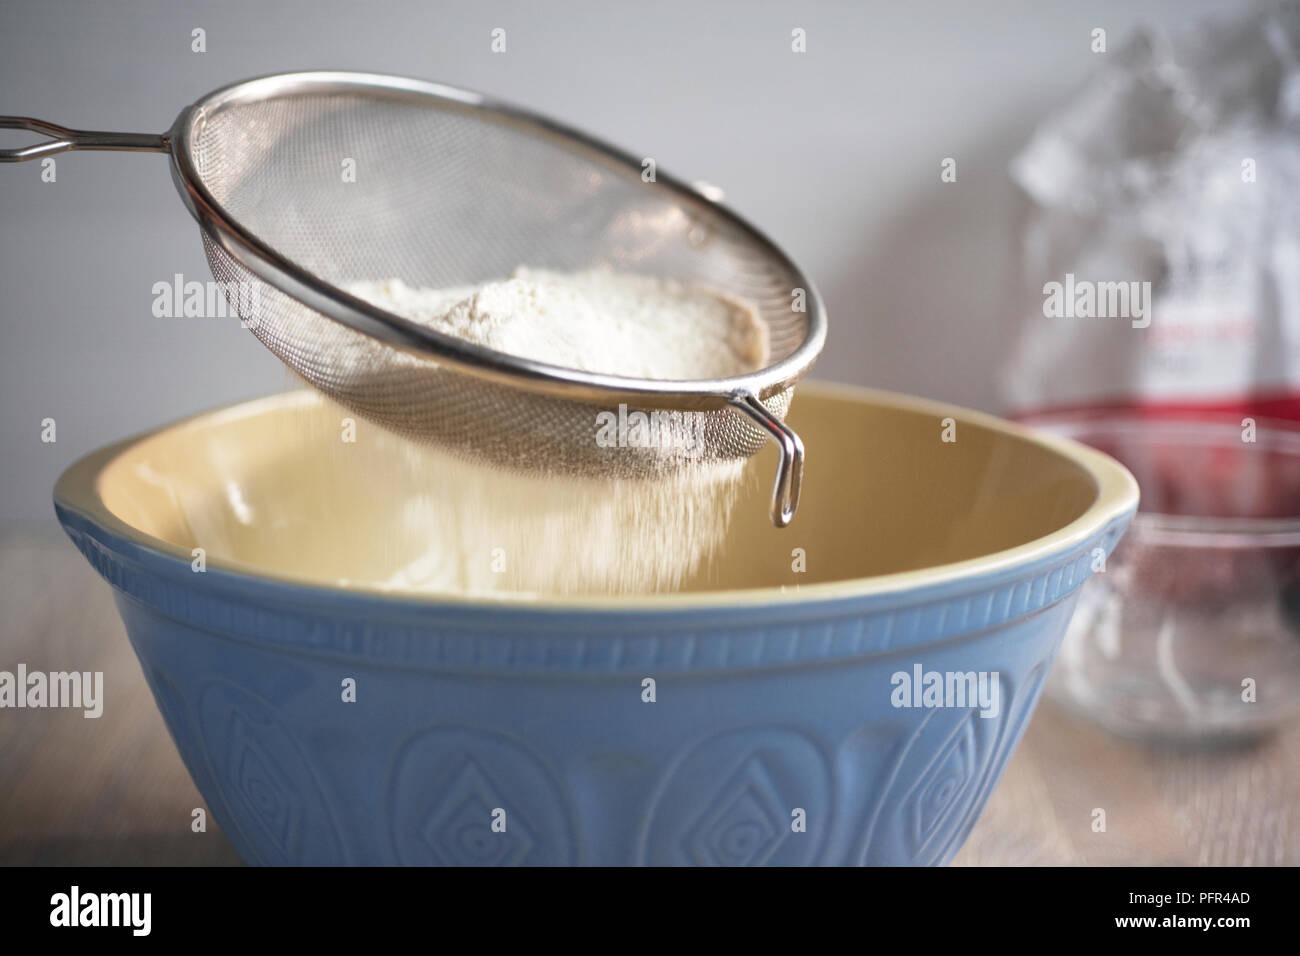 Sifting flour into mixing bowl Stock Photo